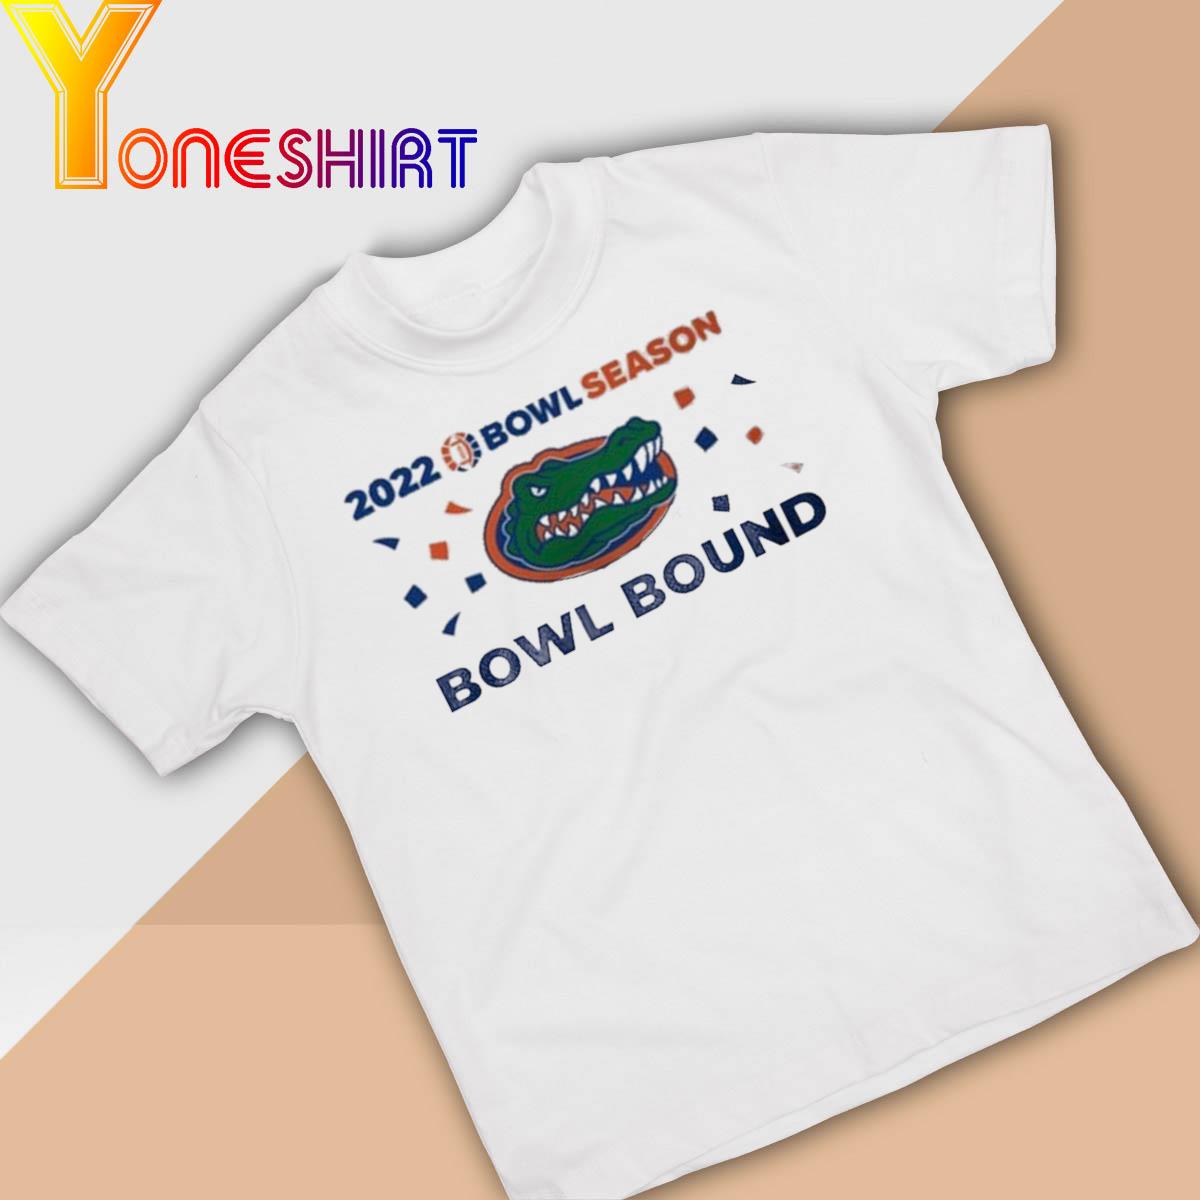 Official Florida Gator 2022 Bowl Season Bowl Bound shirt